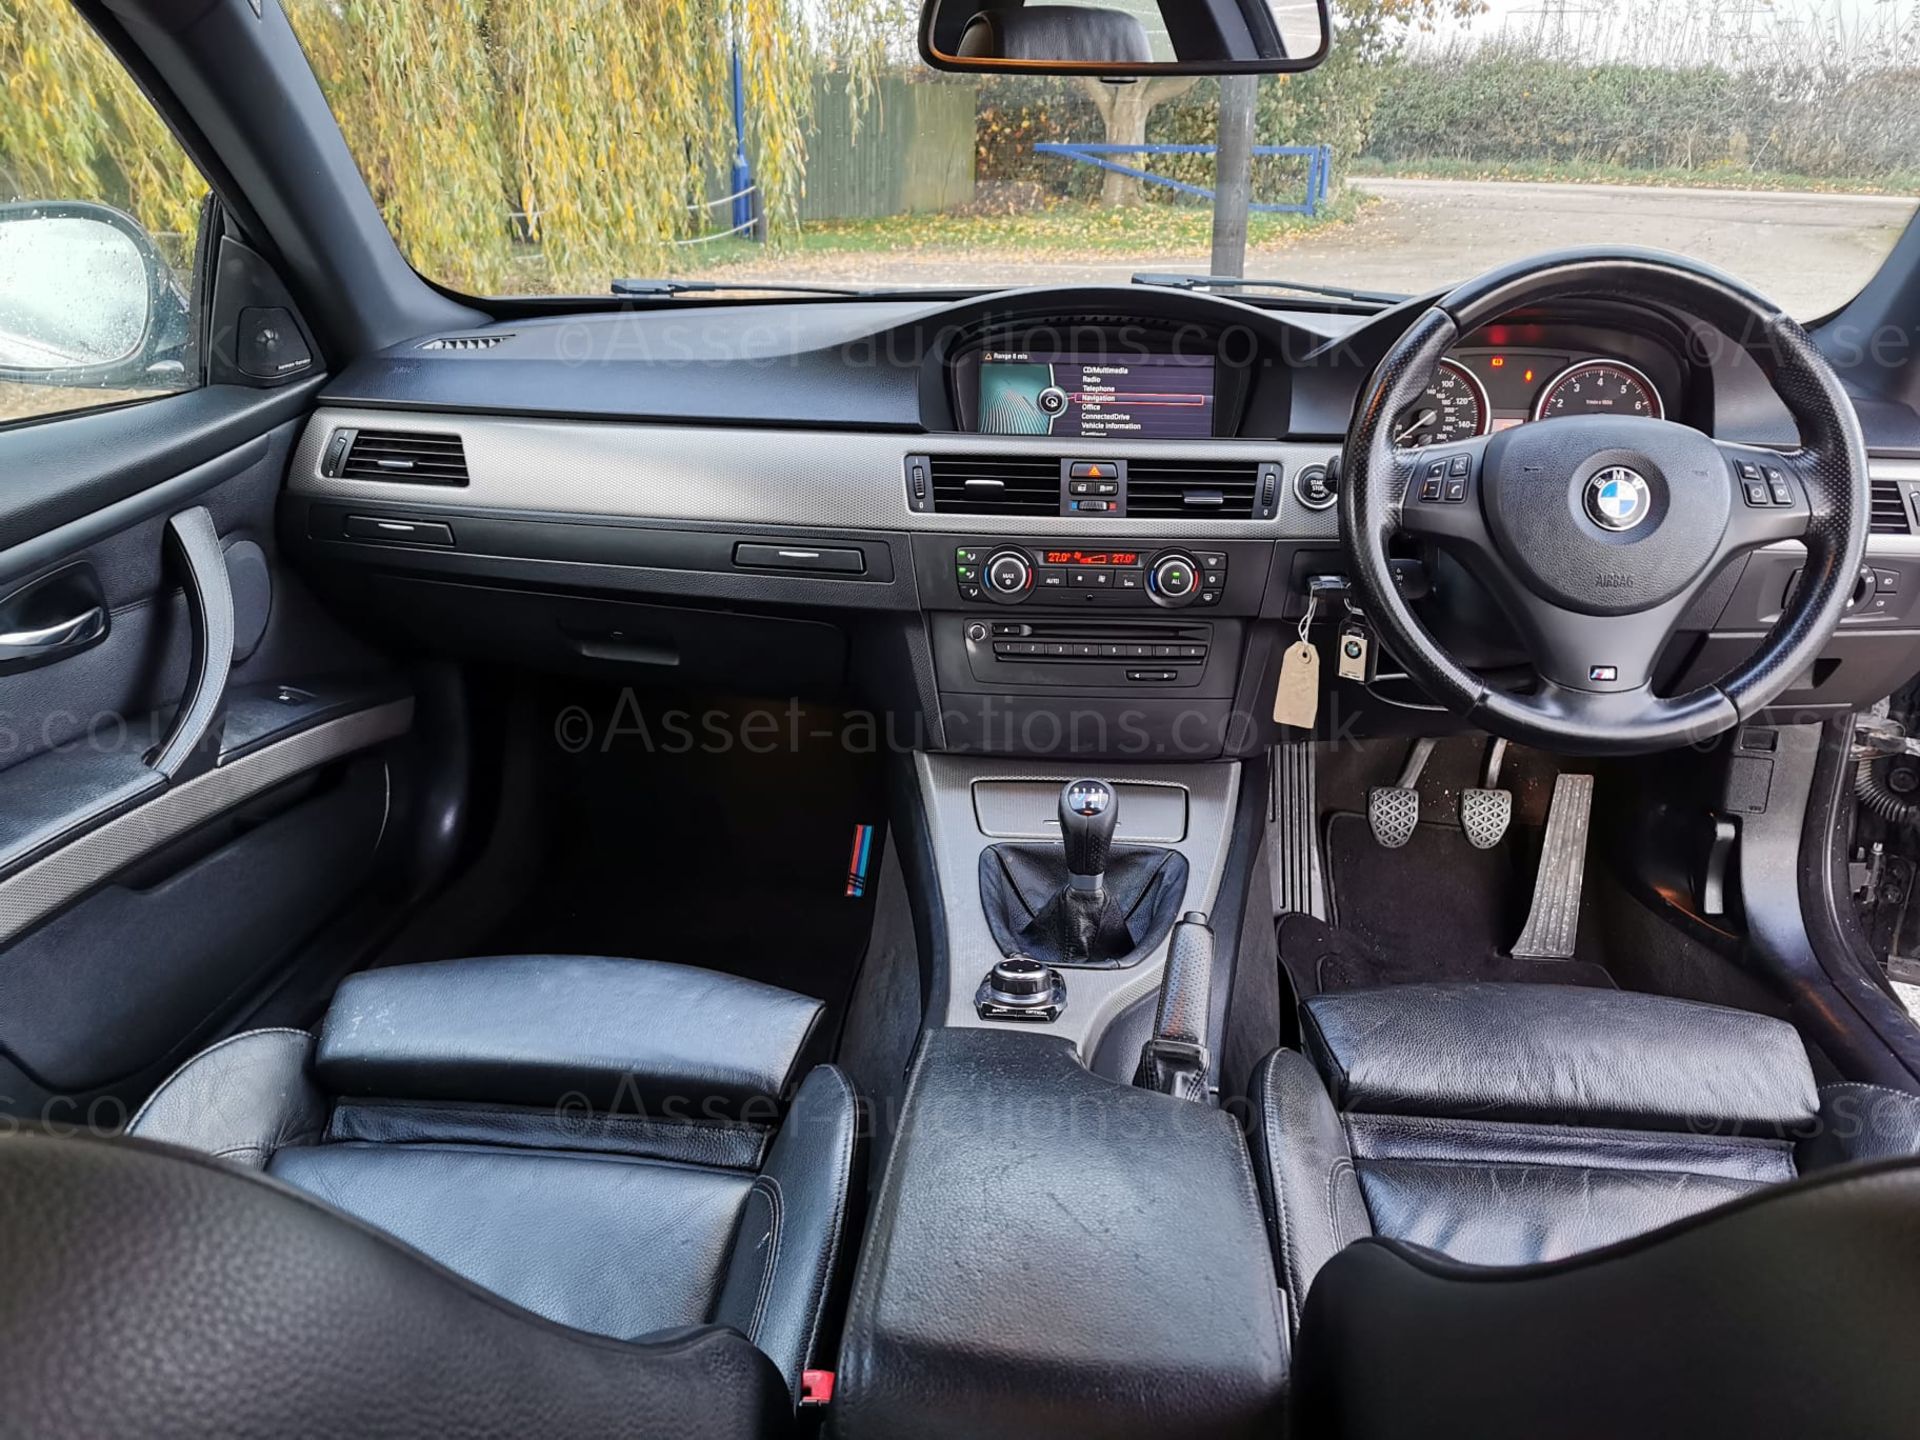 2012 BMW 335I SPORT PLUS EDITION BLACK COUPE, 164,779 MILES, 3.0 PETROL ENGINE *NO VAT* - Image 24 of 29